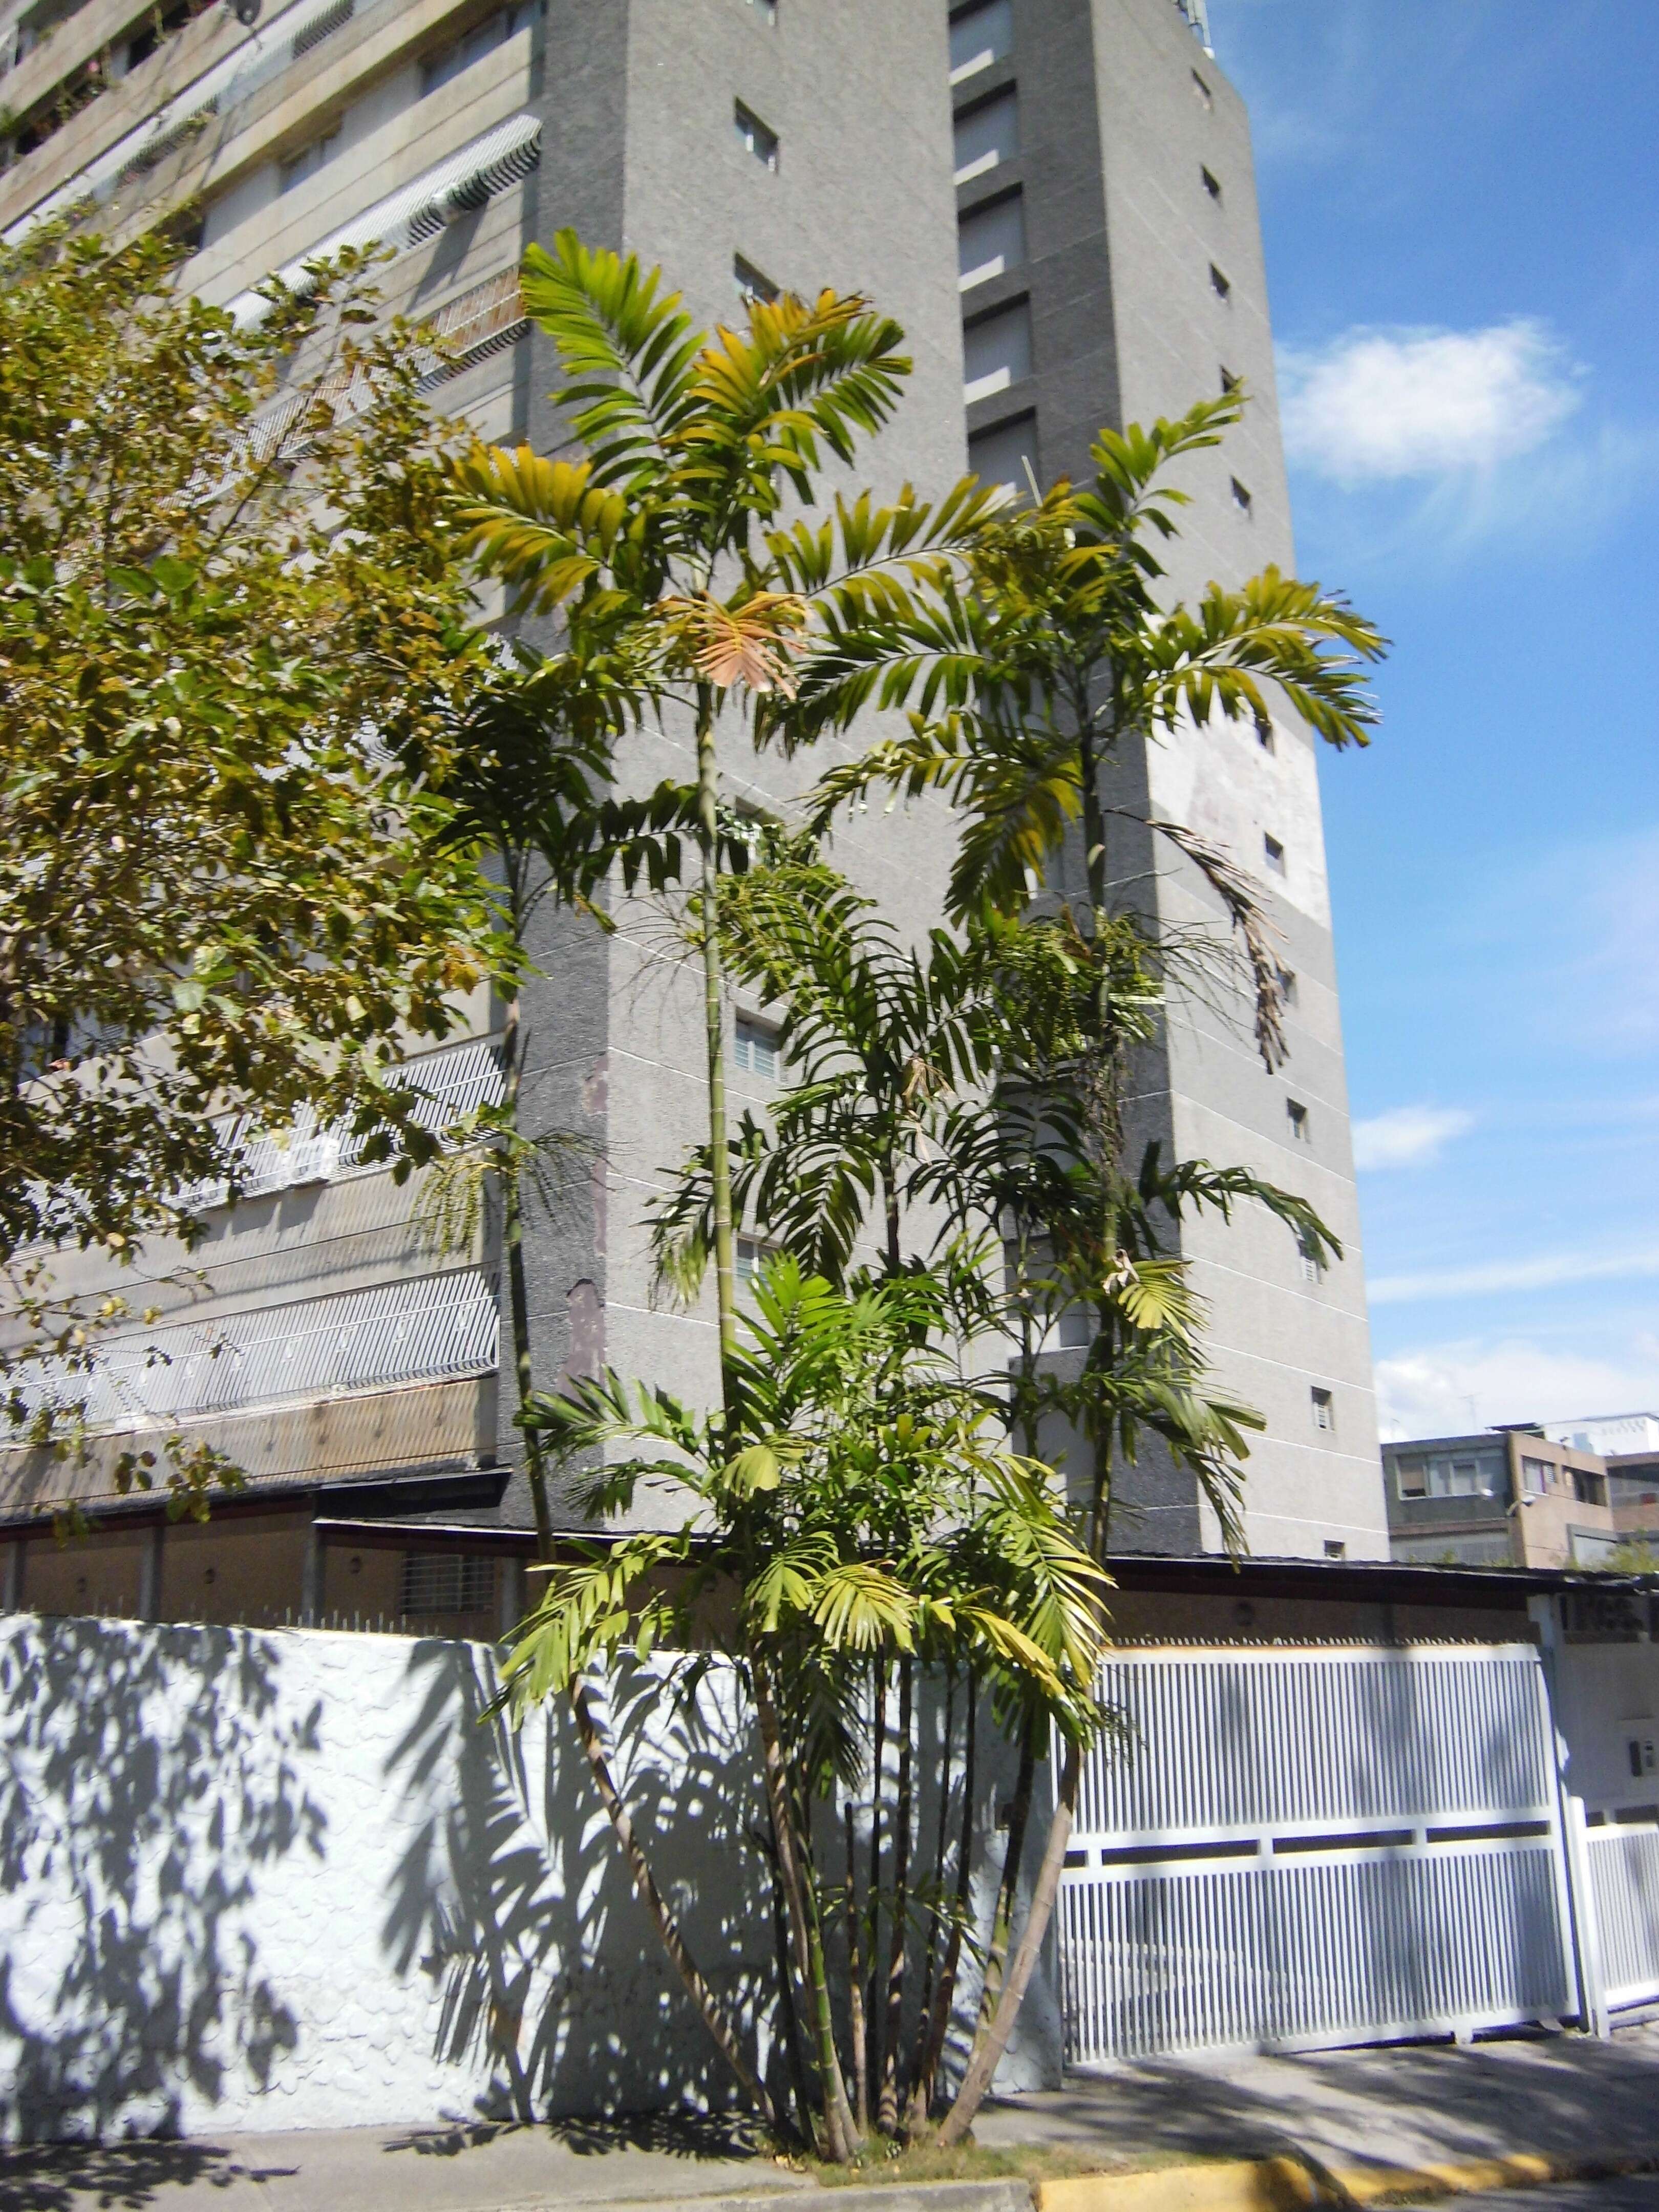 Image of Macarthur Palm